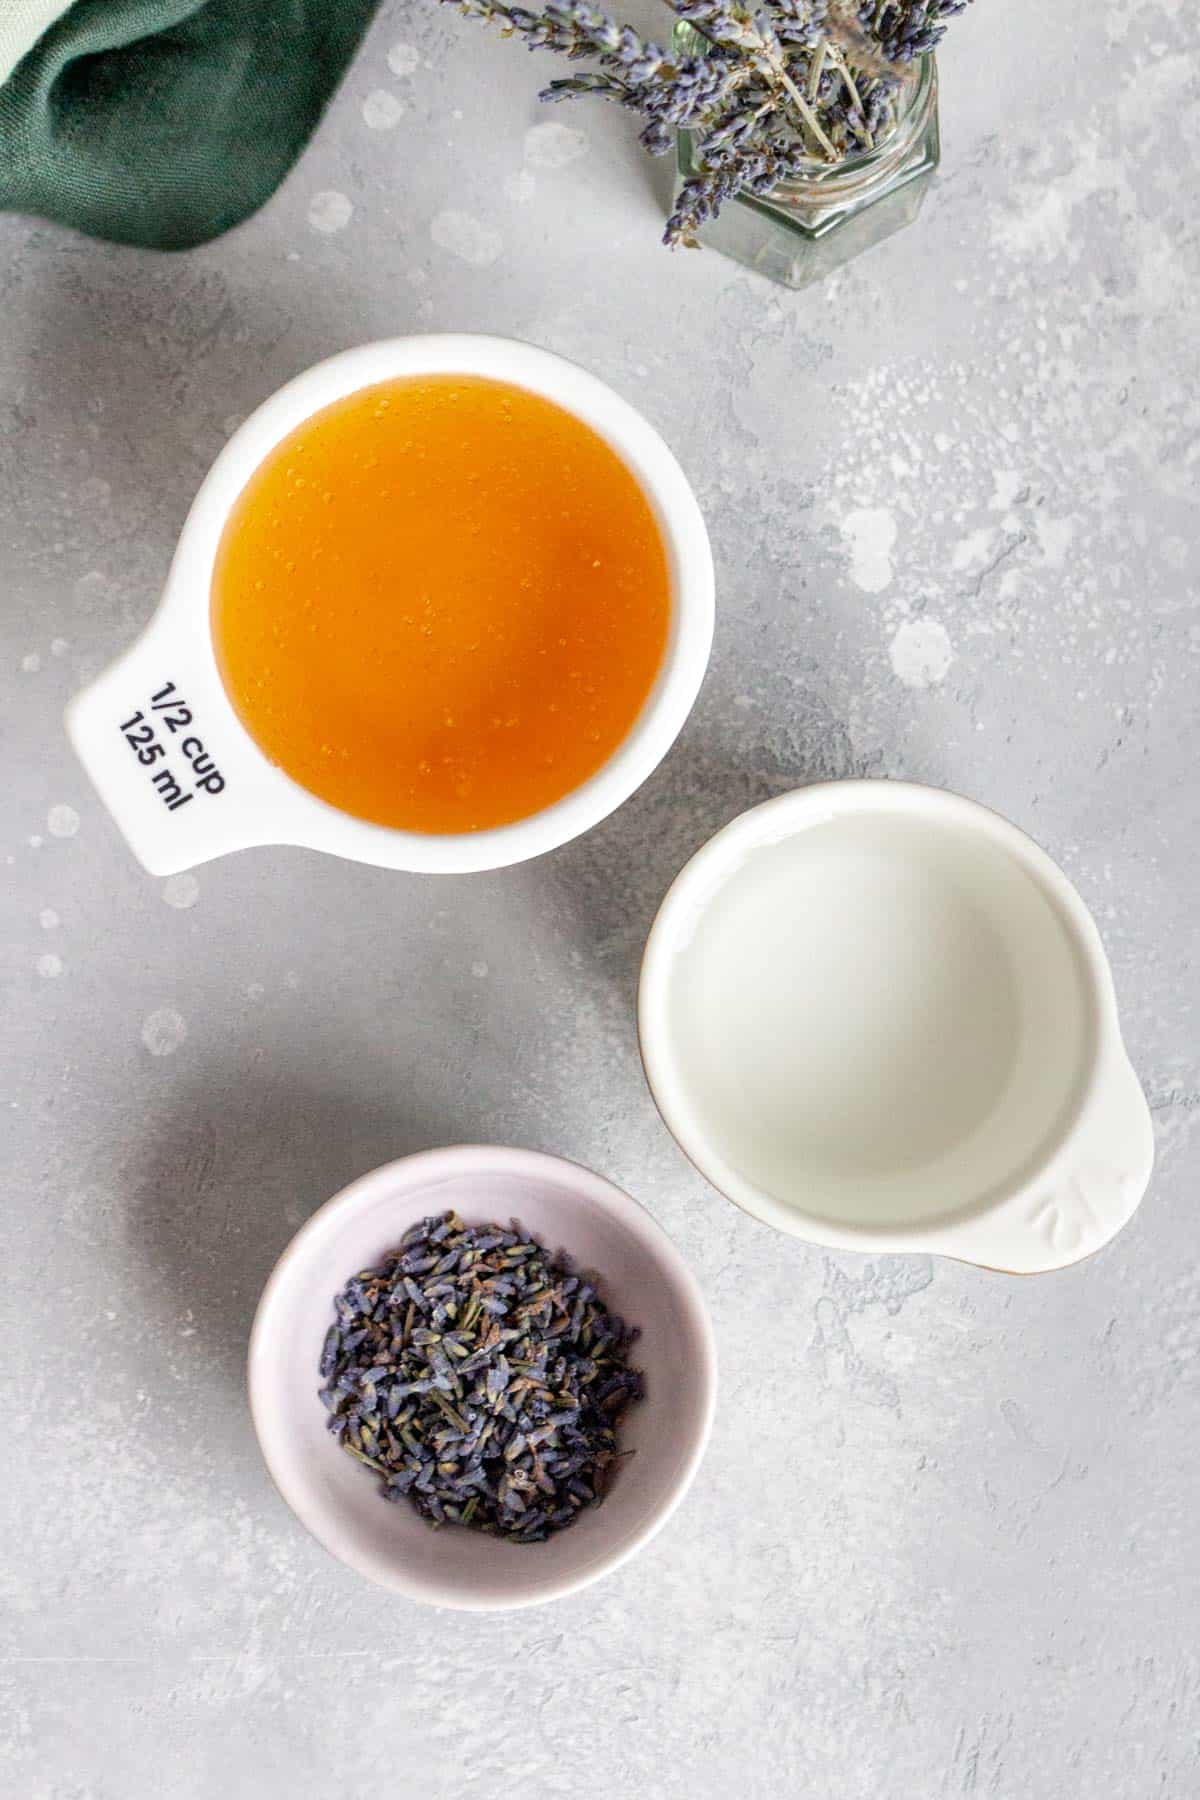 Ingredients needed to make honey lavender syrup.